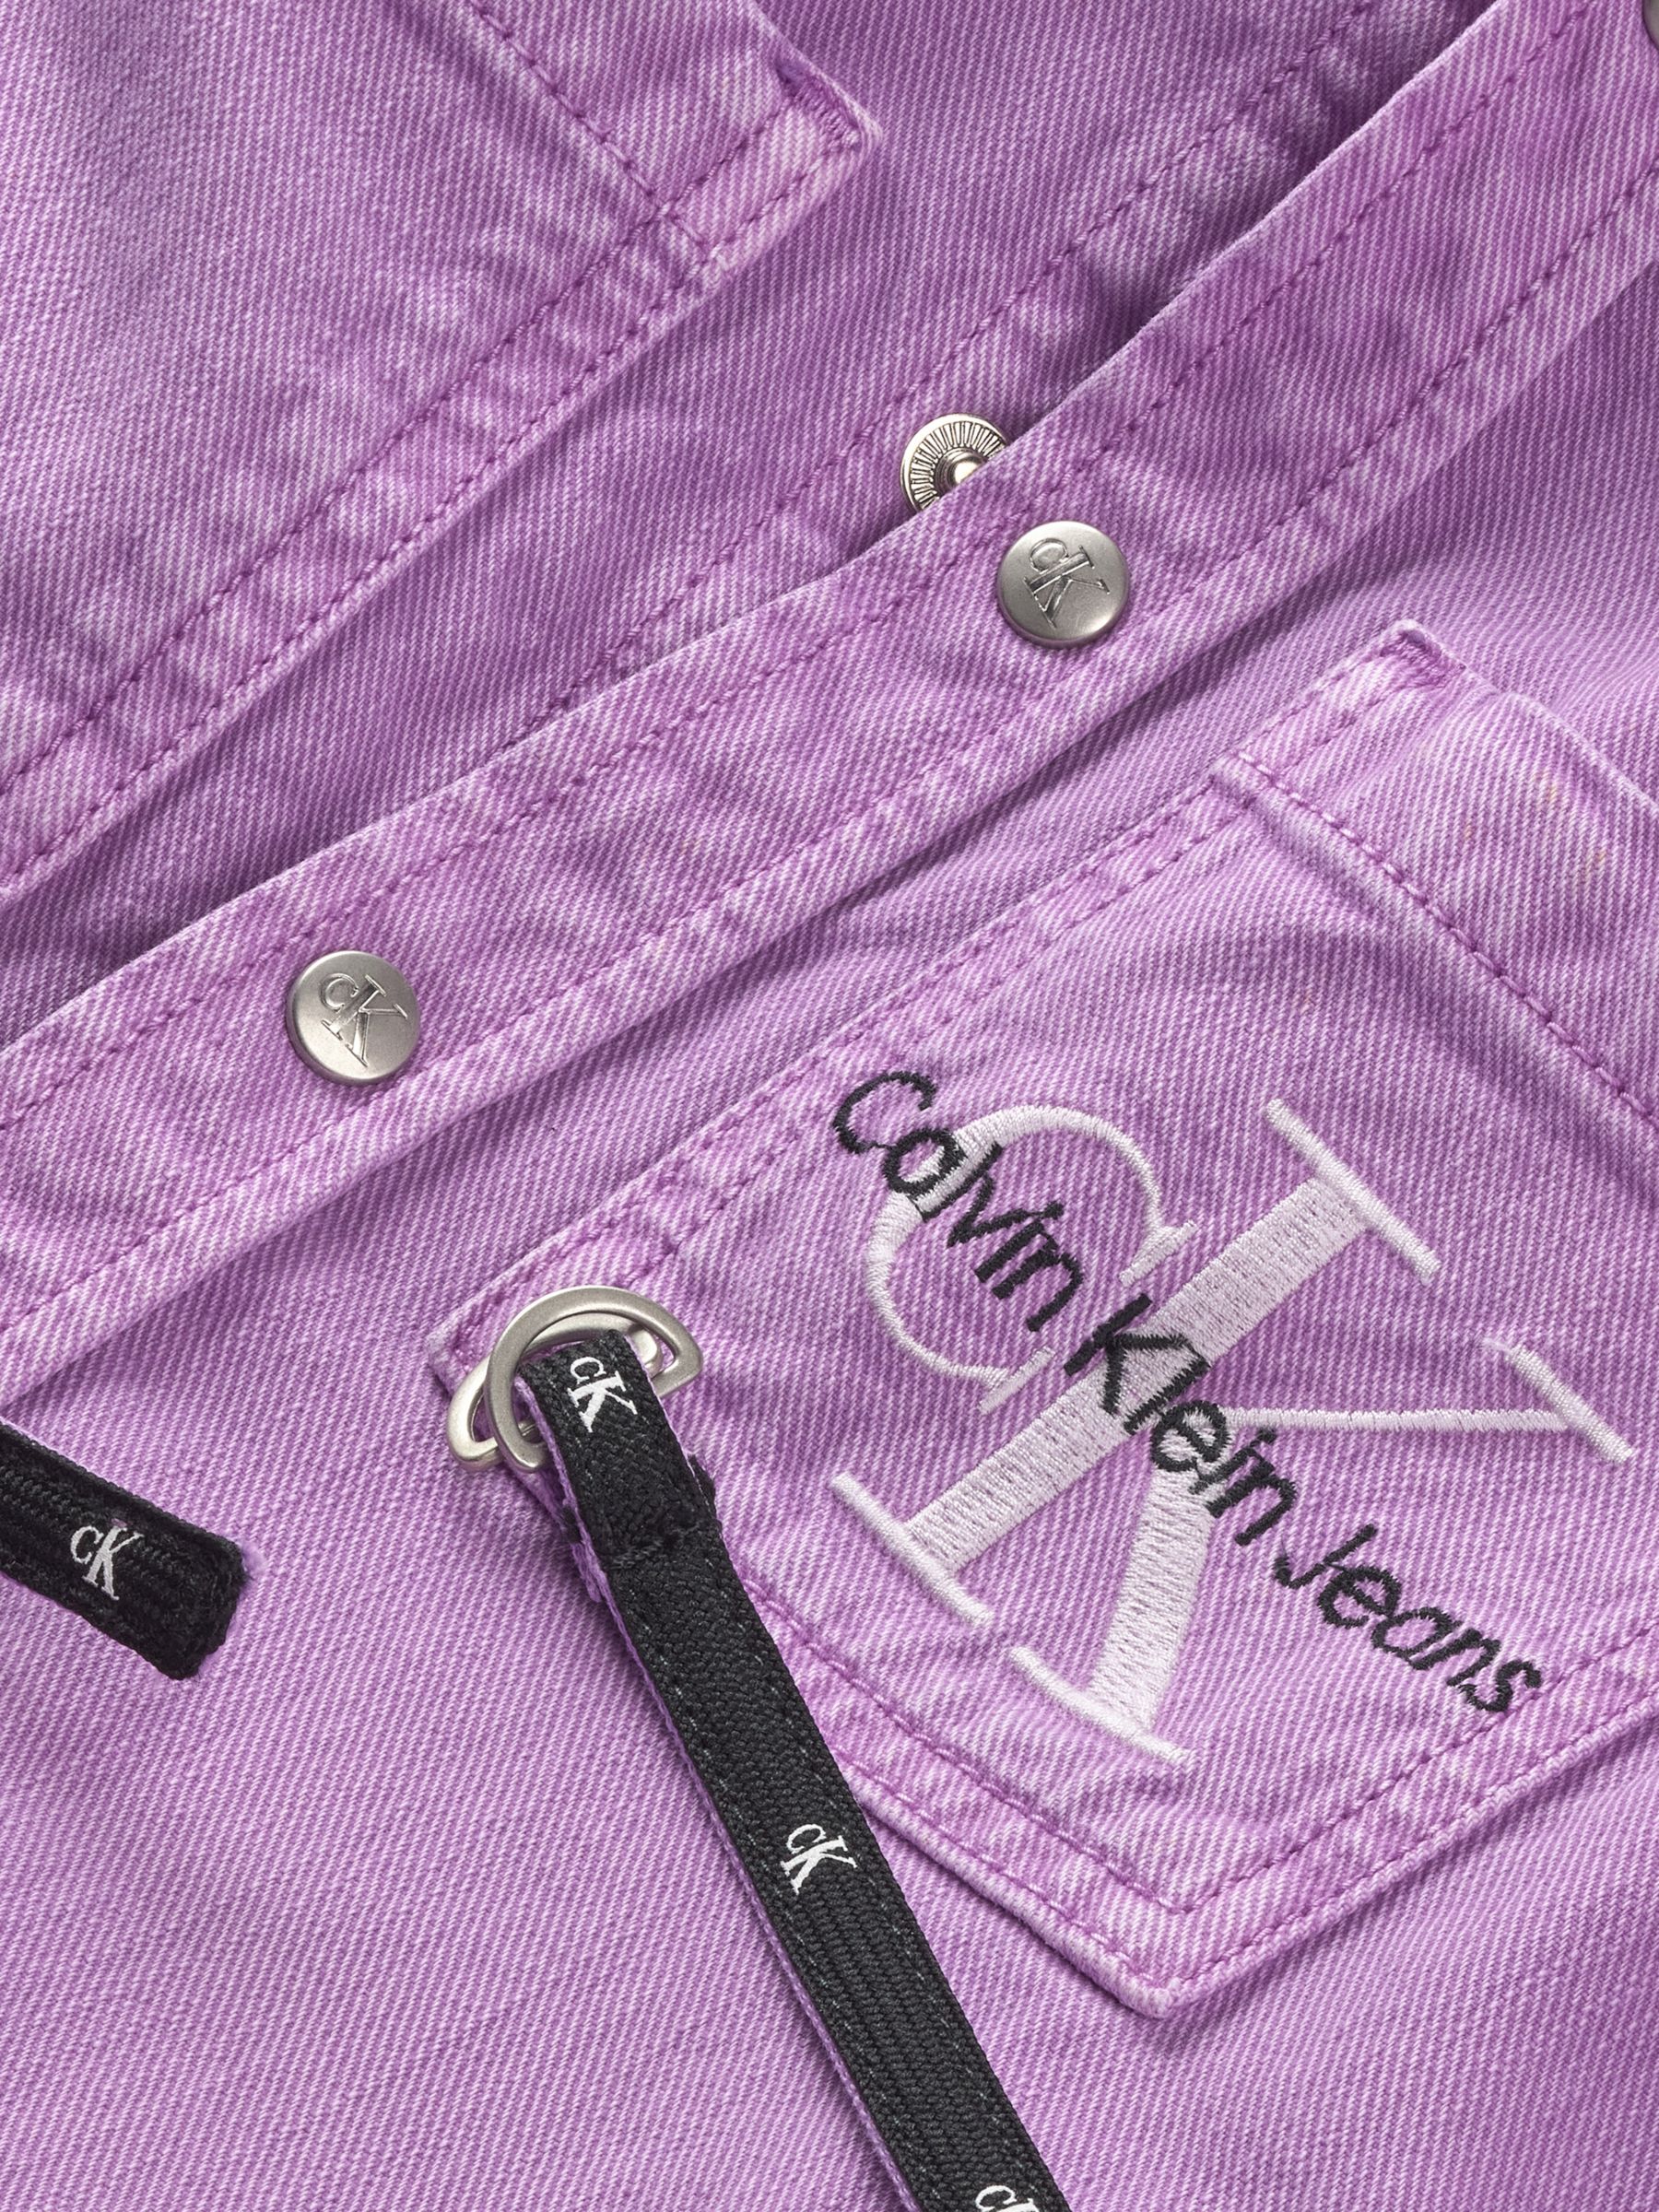 Buy Calvin Klein Kids' Cotton Shirt Dress, Iris Orchid Online at johnlewis.com